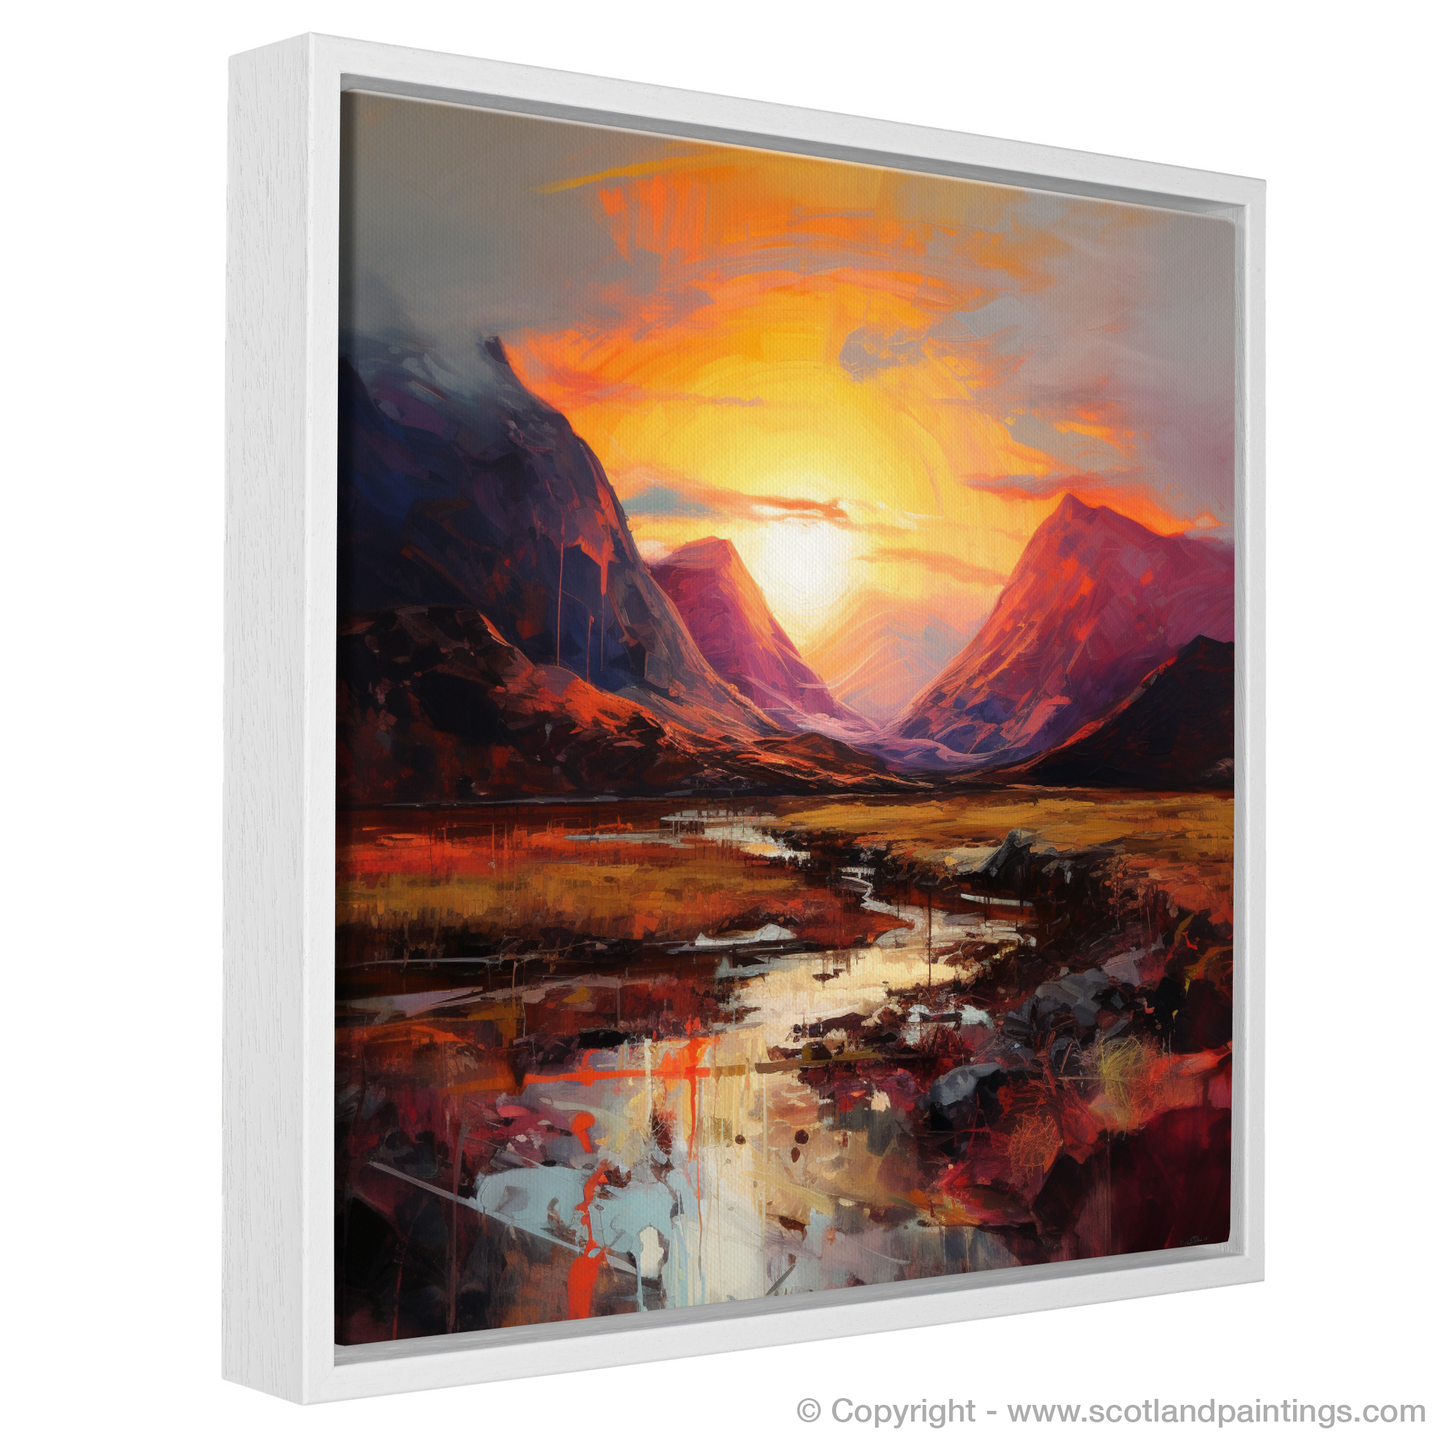 Painting and Art Print of Sunset glow in Glencoe entitled "Fiery Embrace of Glencoe Sunset".